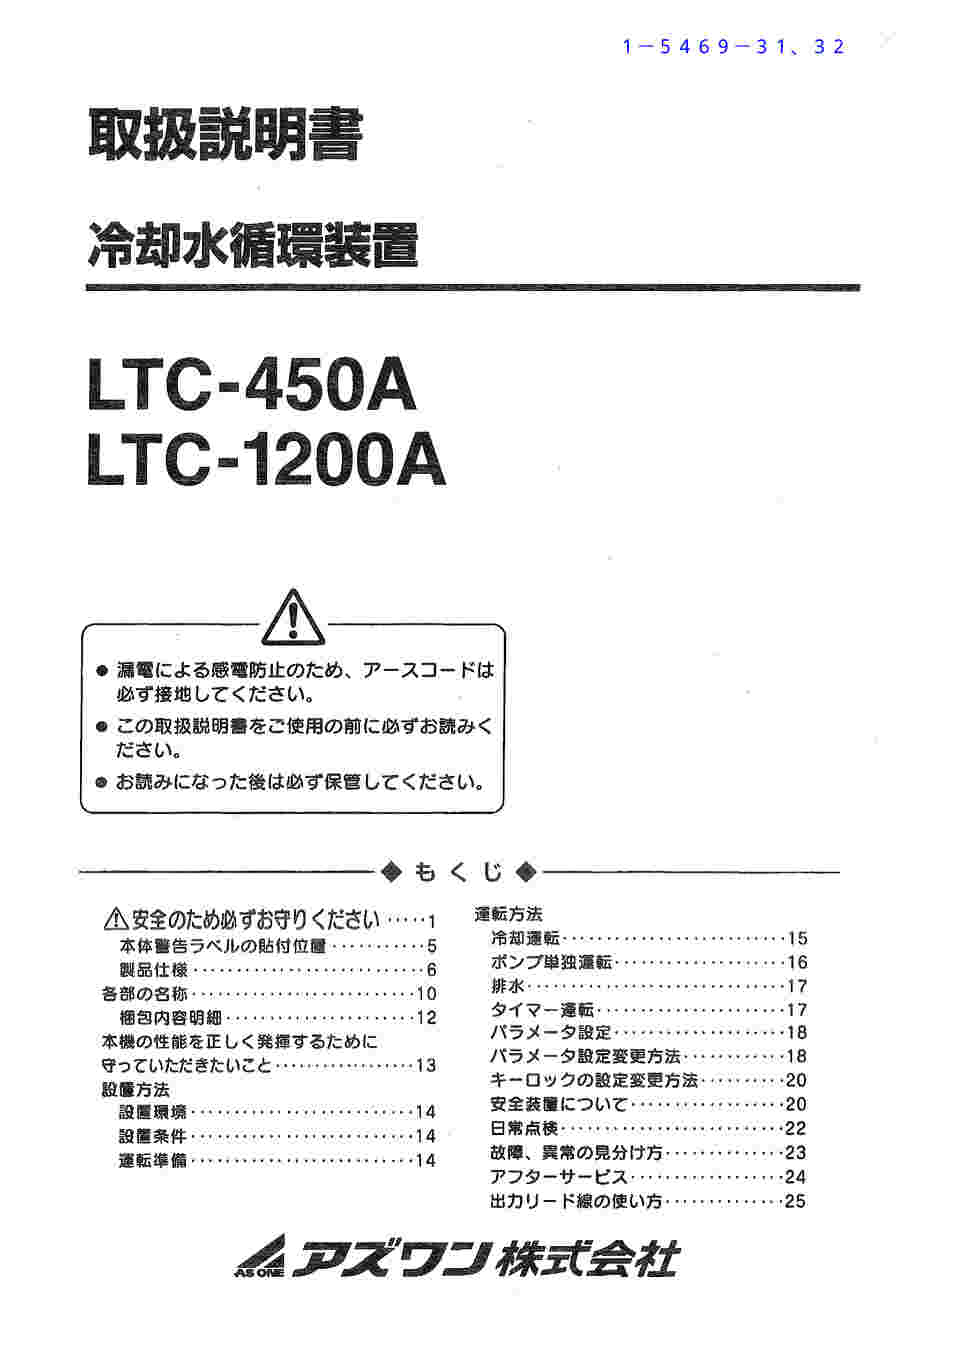 アズワン 冷却水循環装置 LTC-450α (1-5469-41) 《研究・実験用機器》 通販 